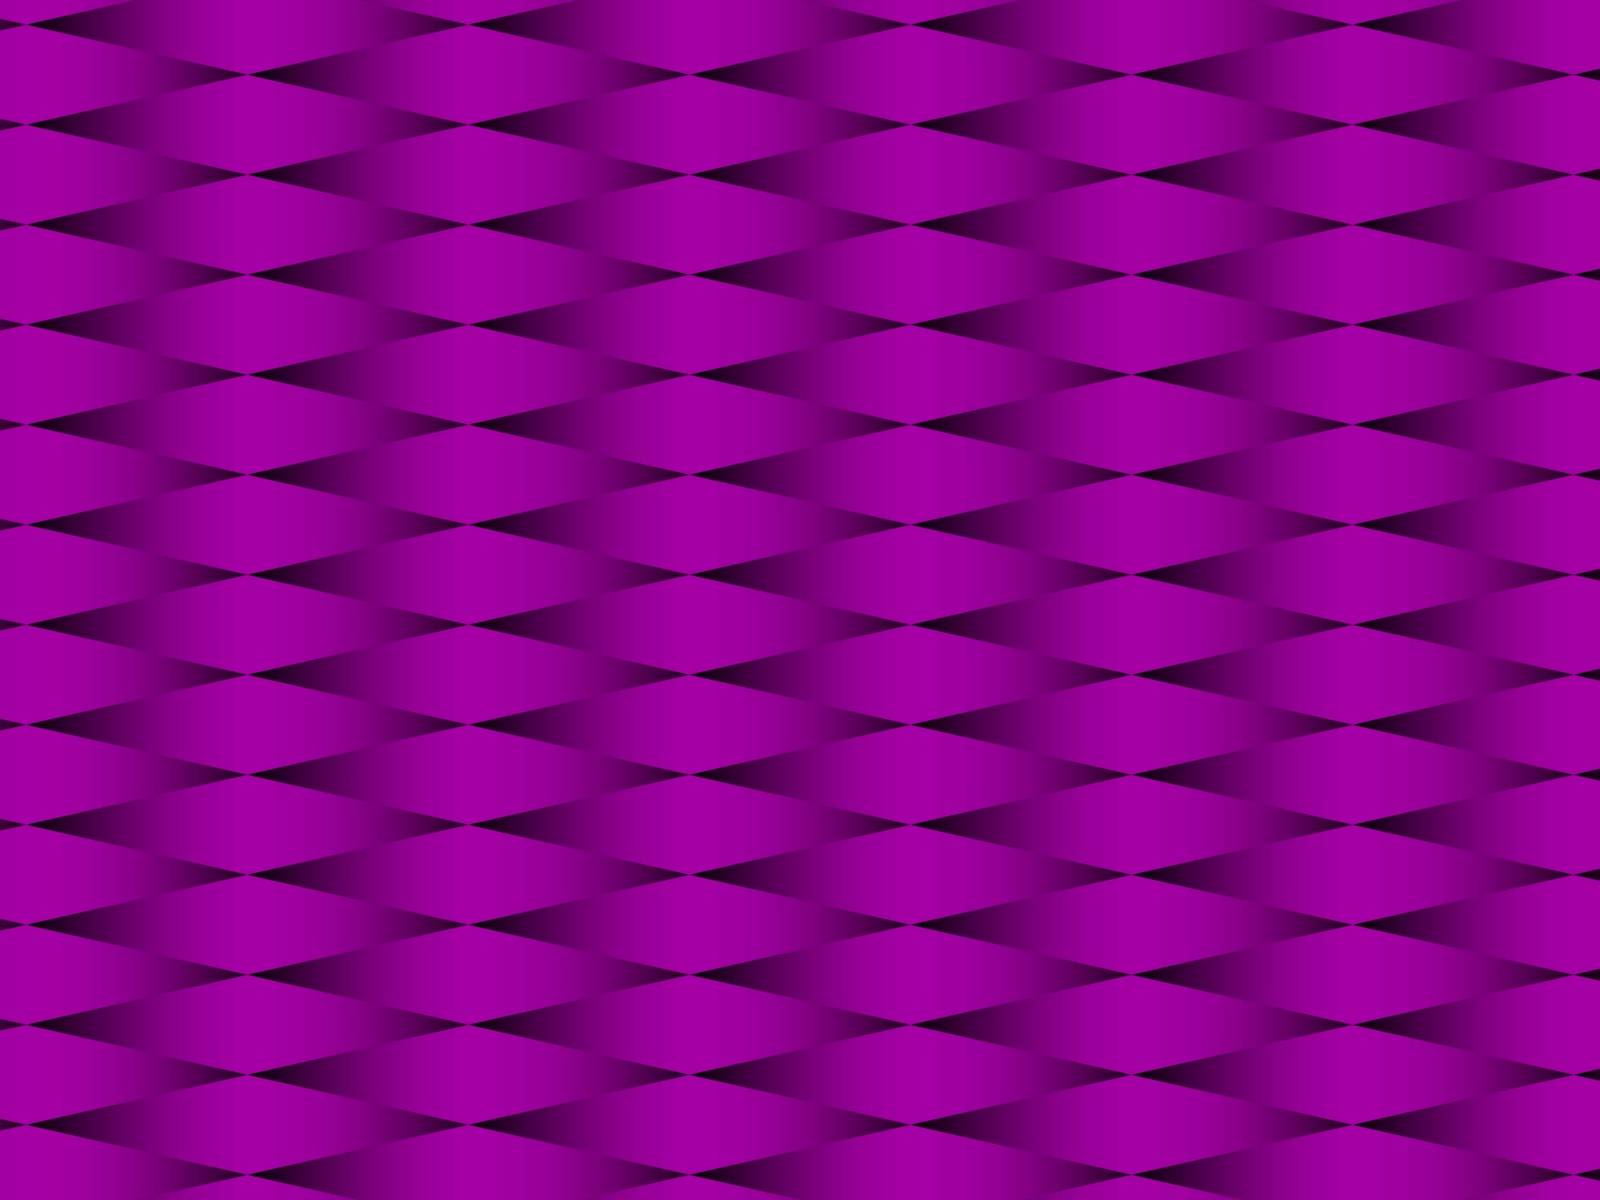 Symmetrical gradient abstract pattern in purple